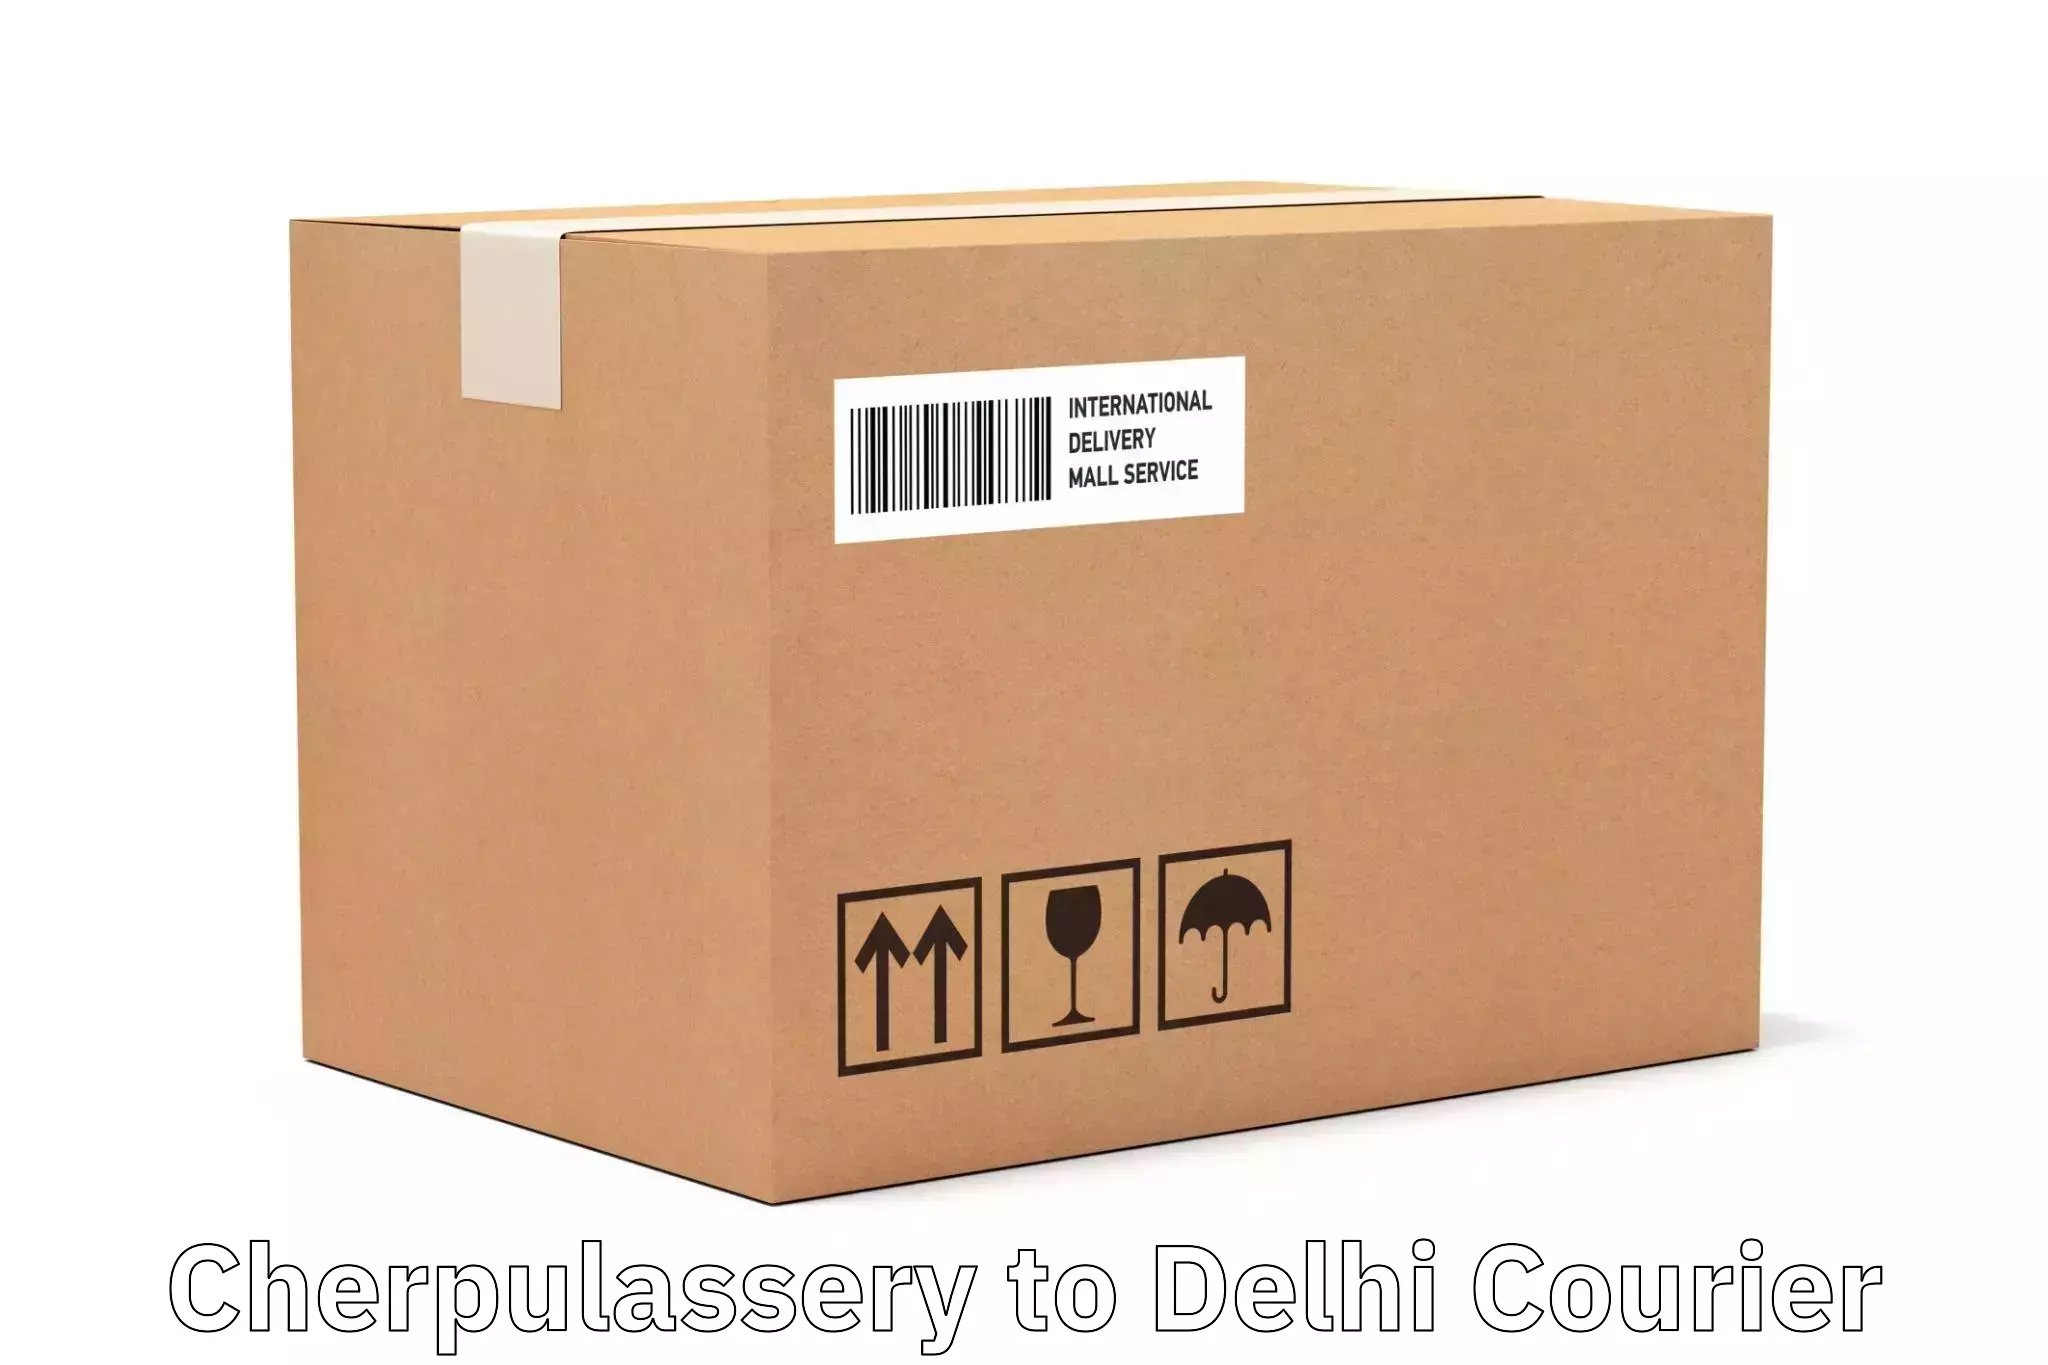 Global courier networks Cherpulassery to Delhi